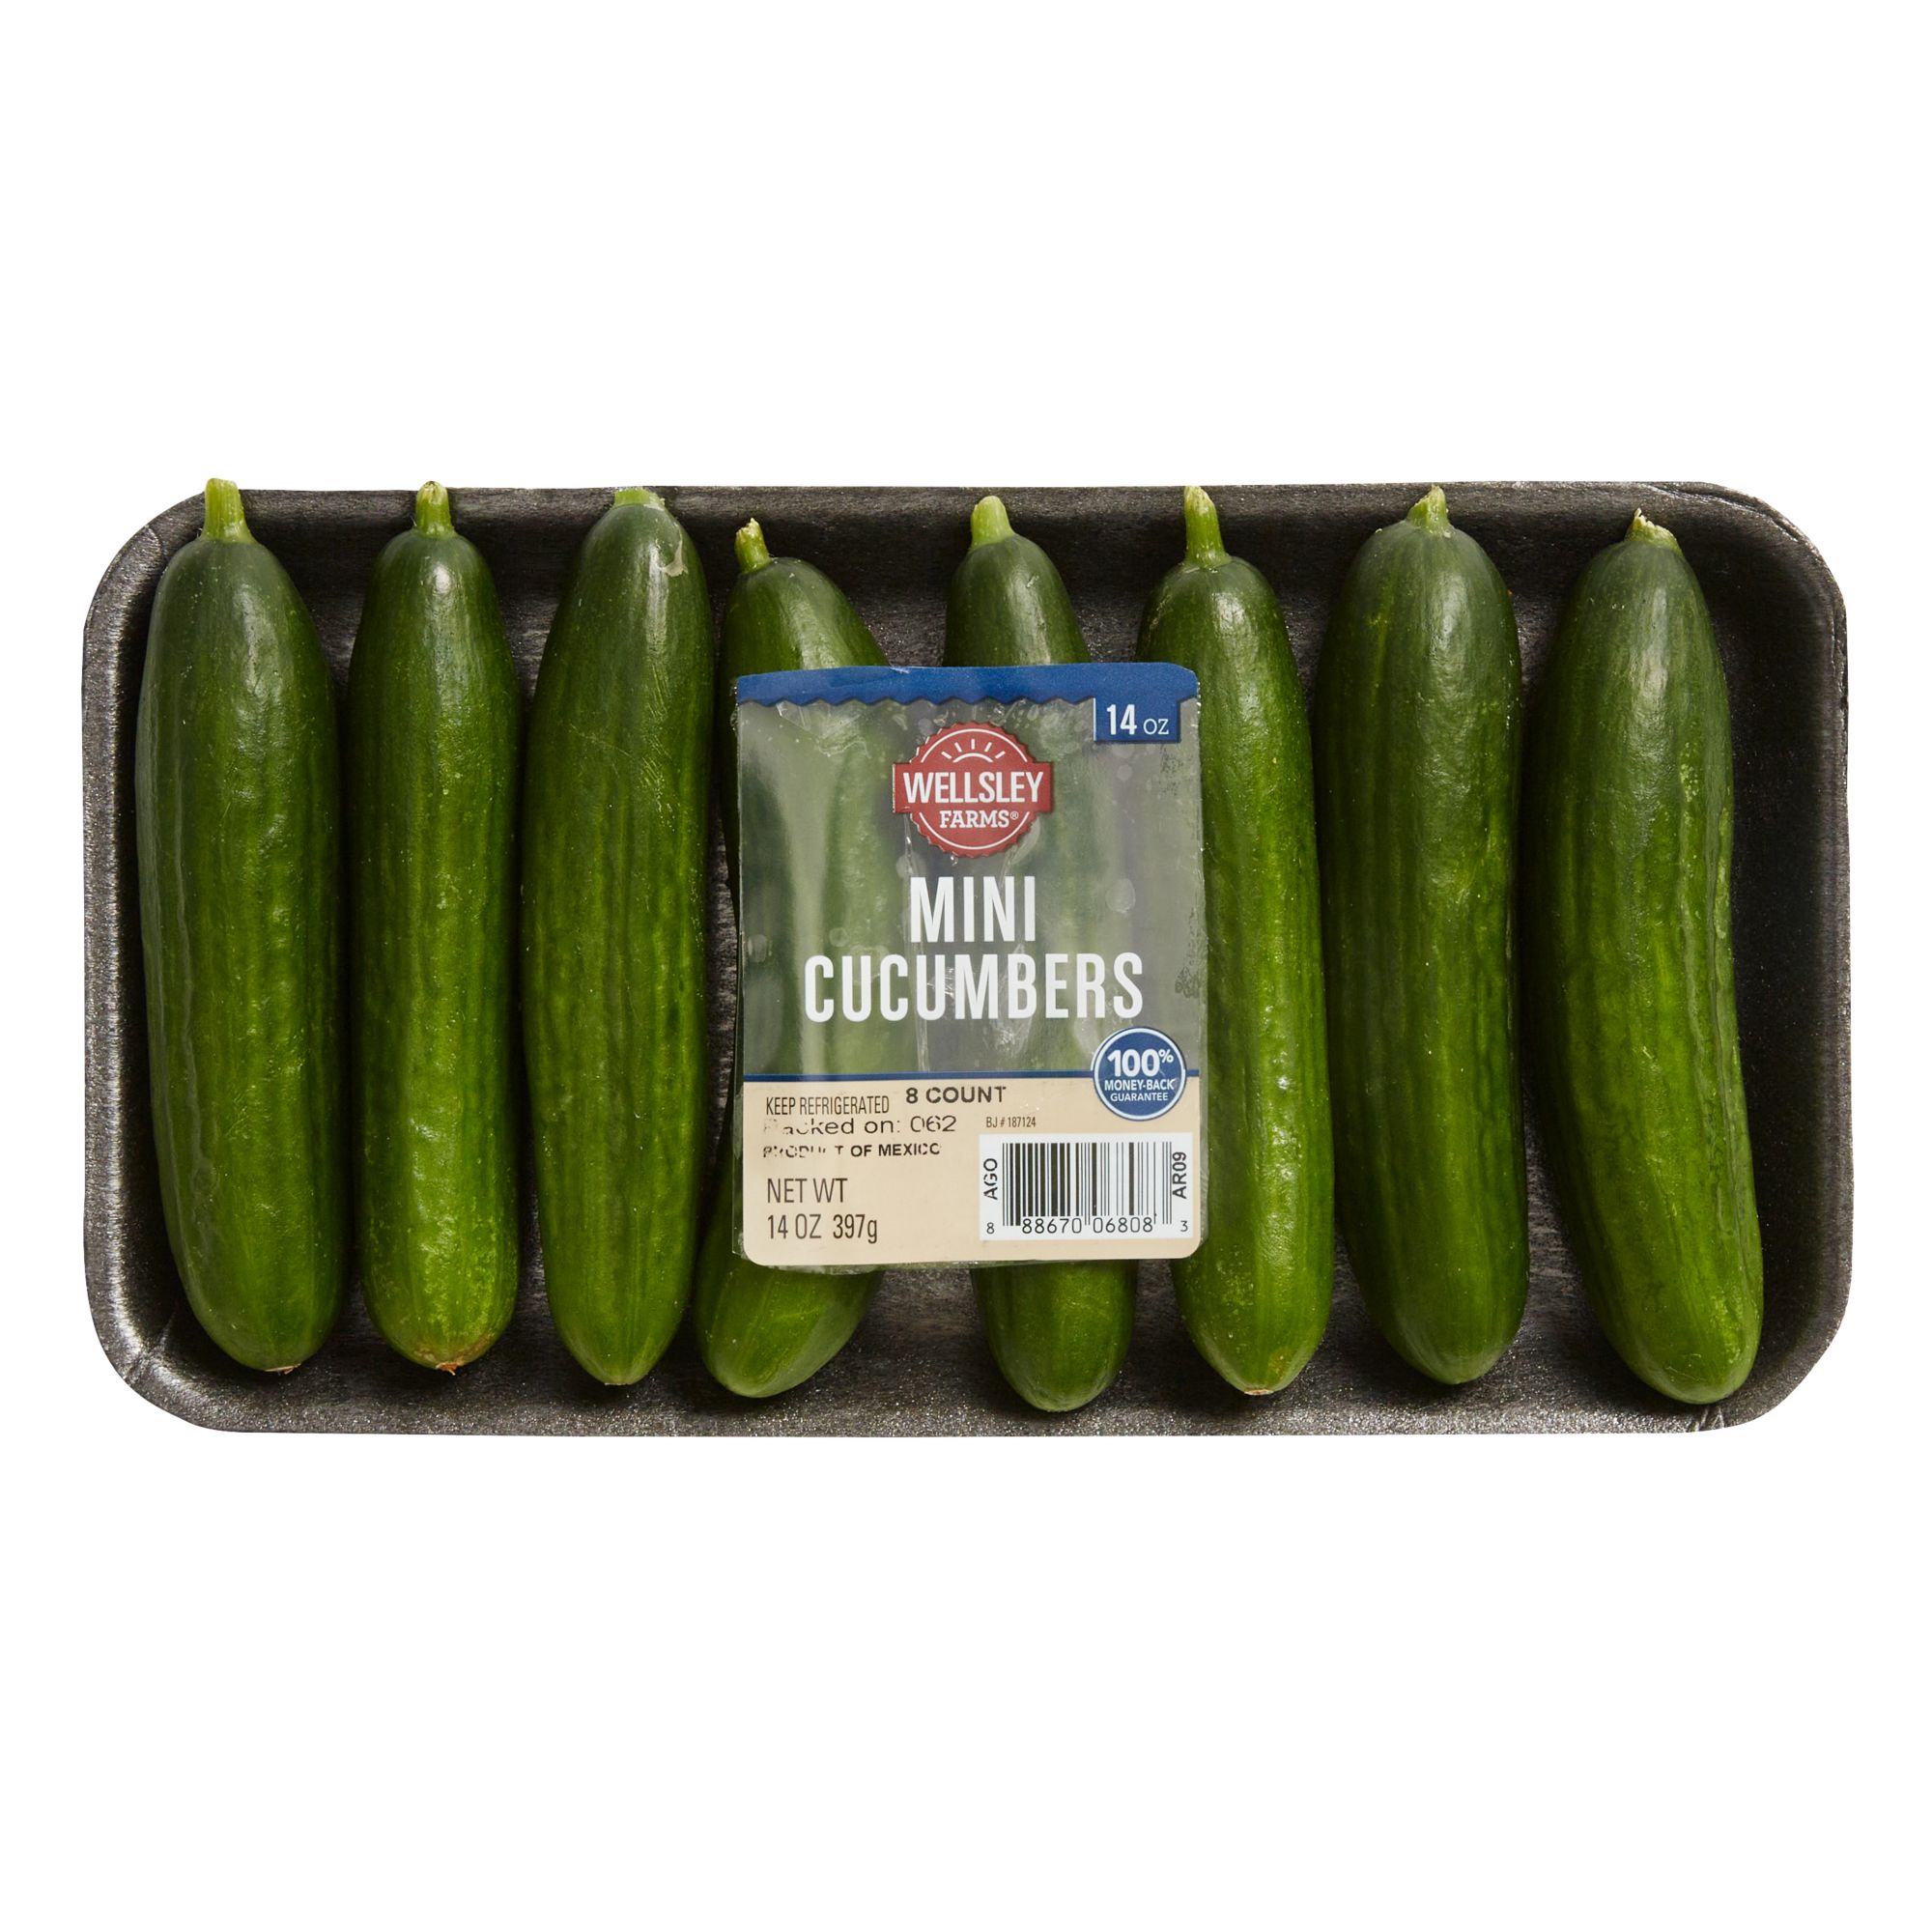 Nature Fresh Farms Reveals New Unveiled Mini Cucumbers